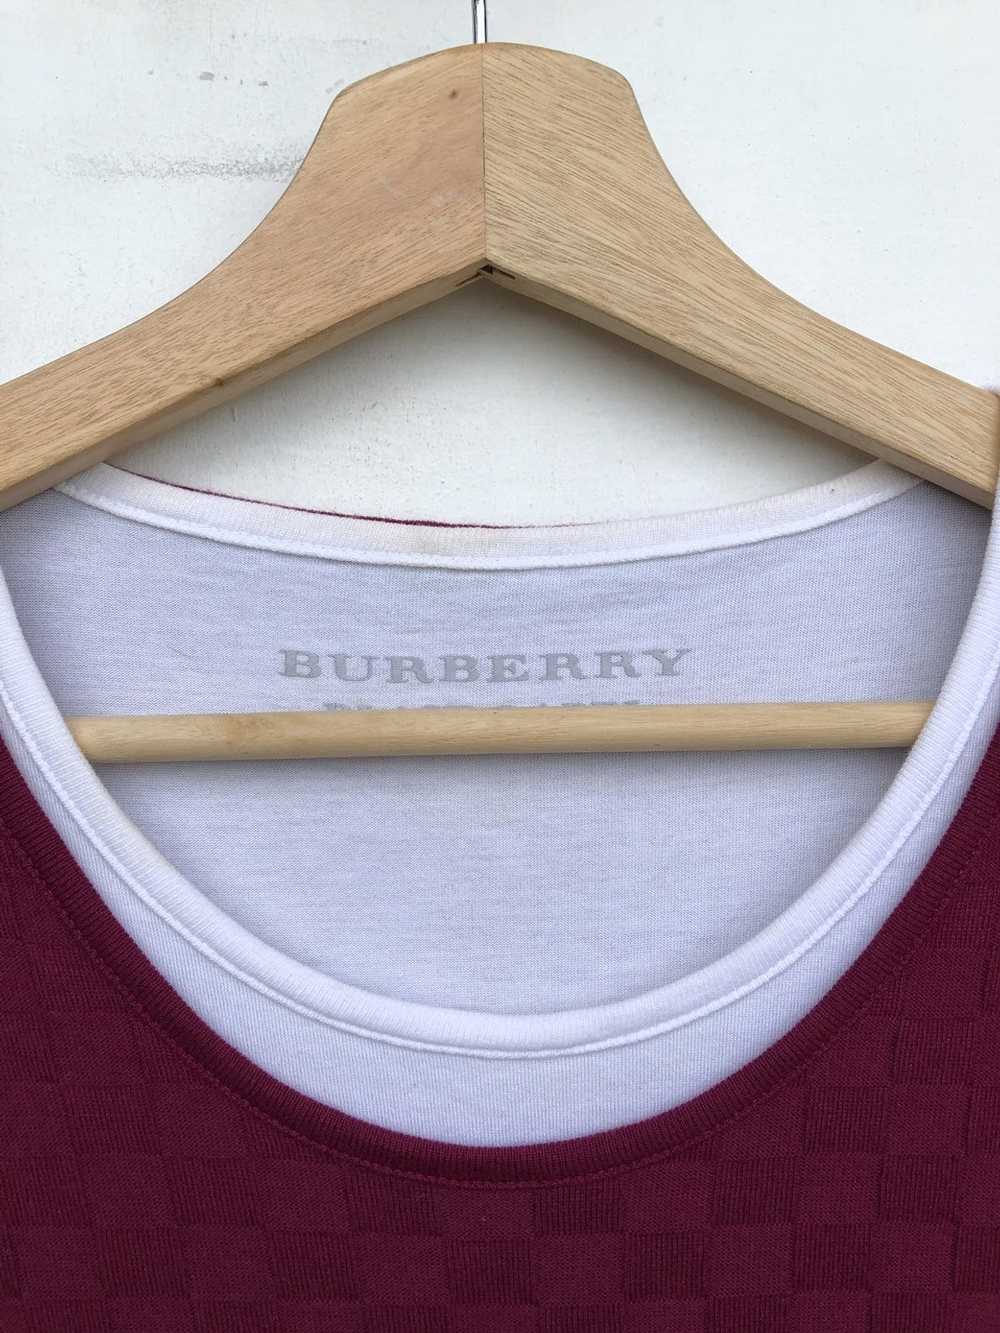 Burberry Burberry Black Label Long Sleeve T-Shirt - image 7